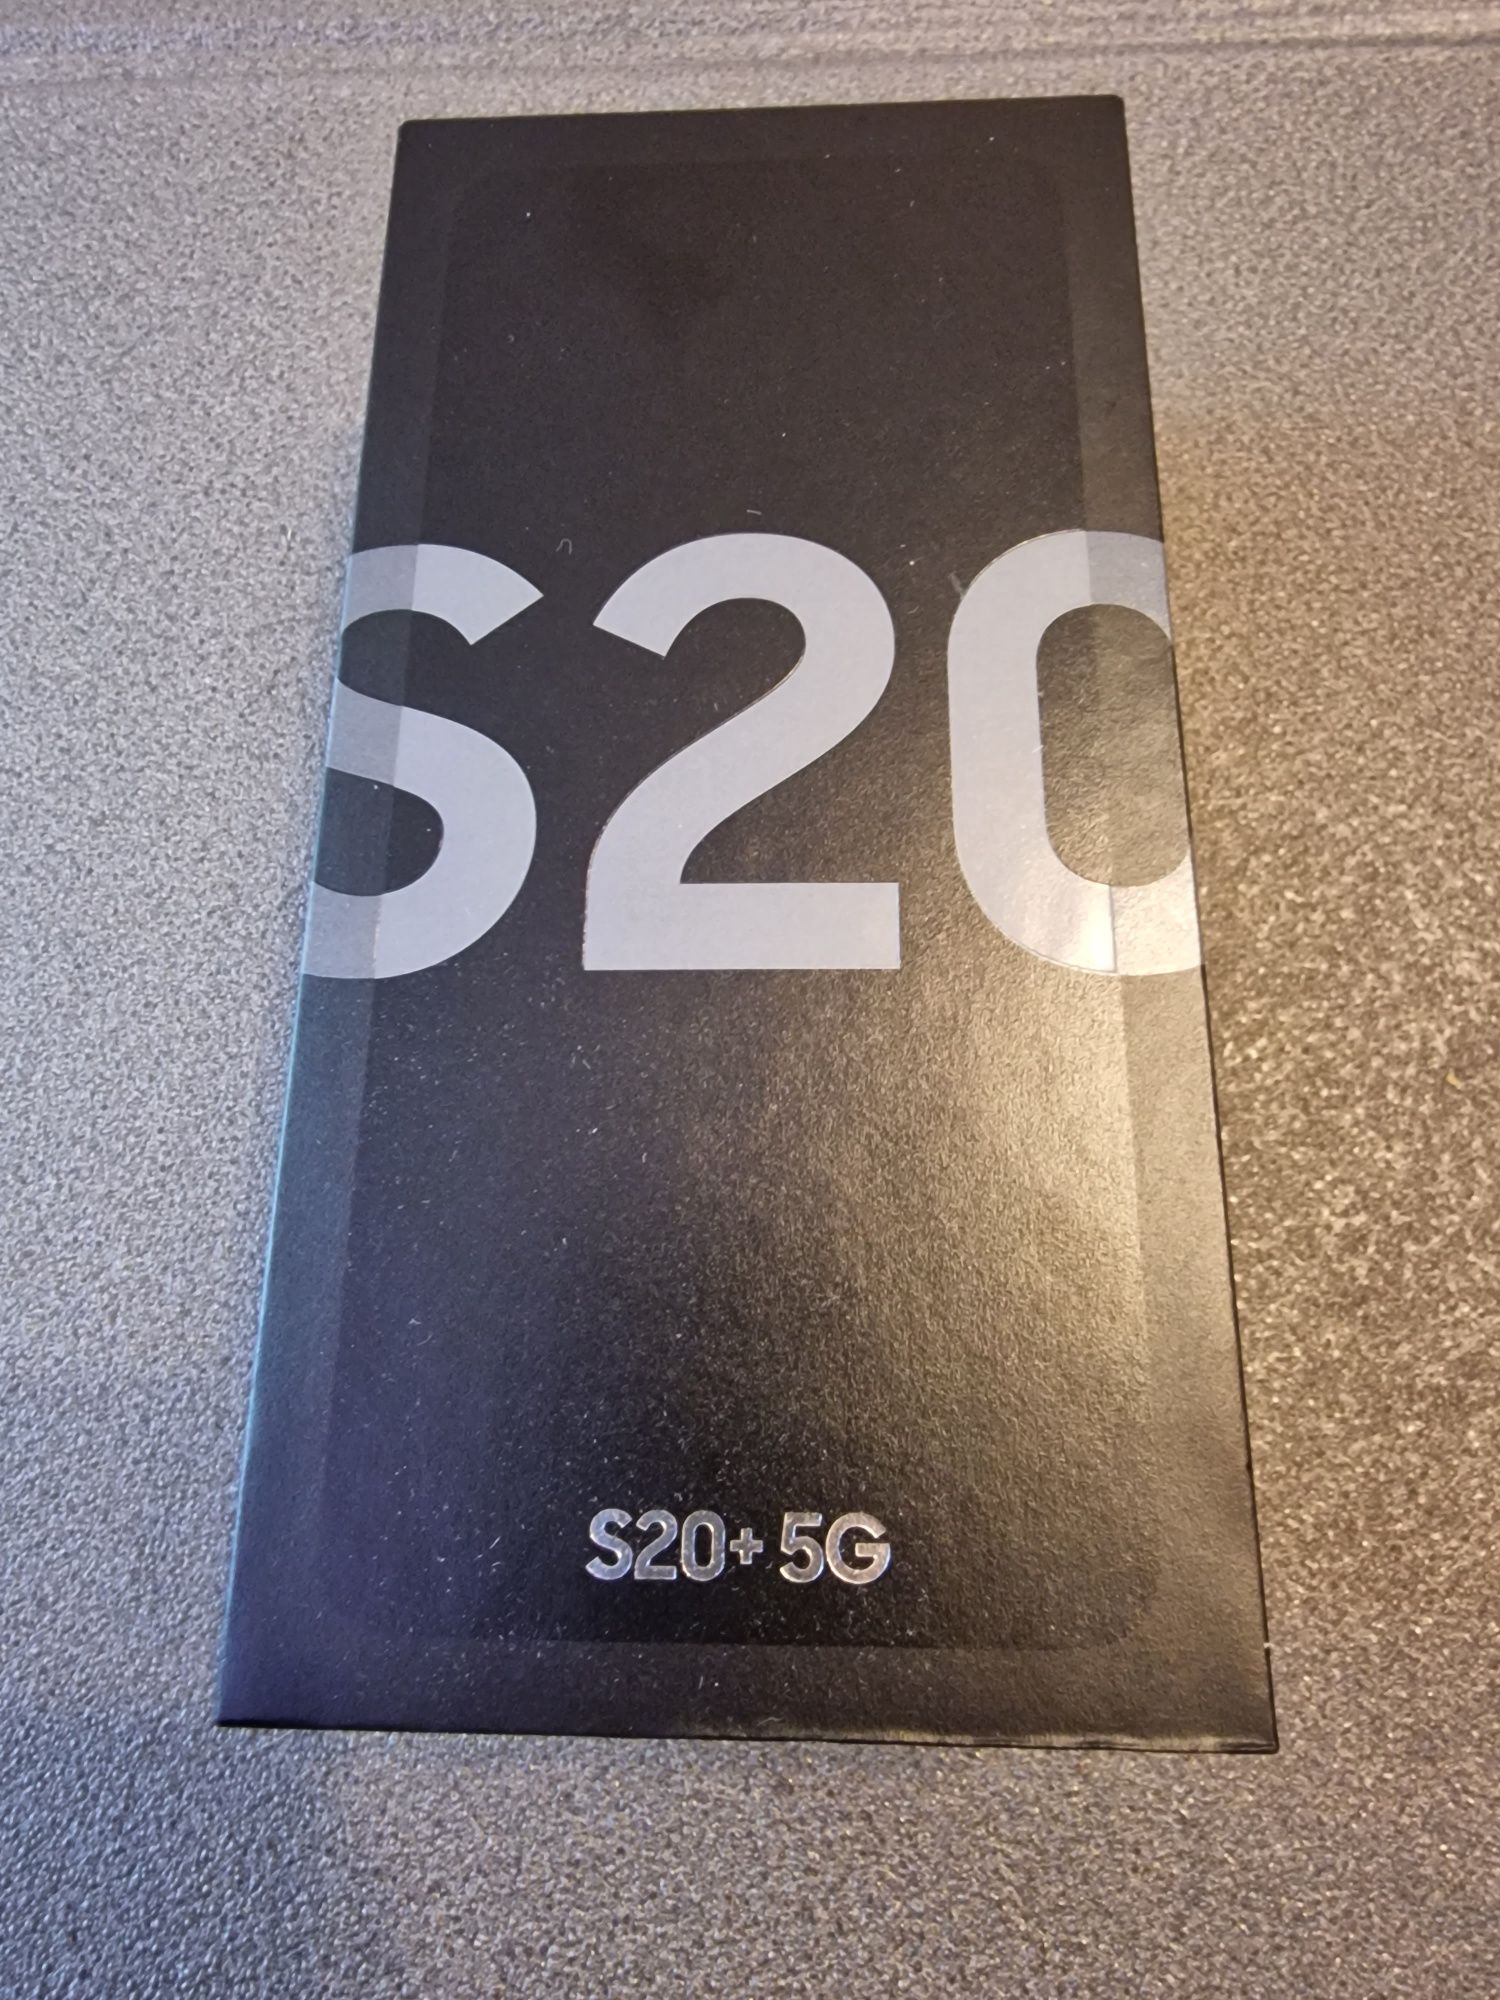 Samsung Galaxy s20 plus 5g